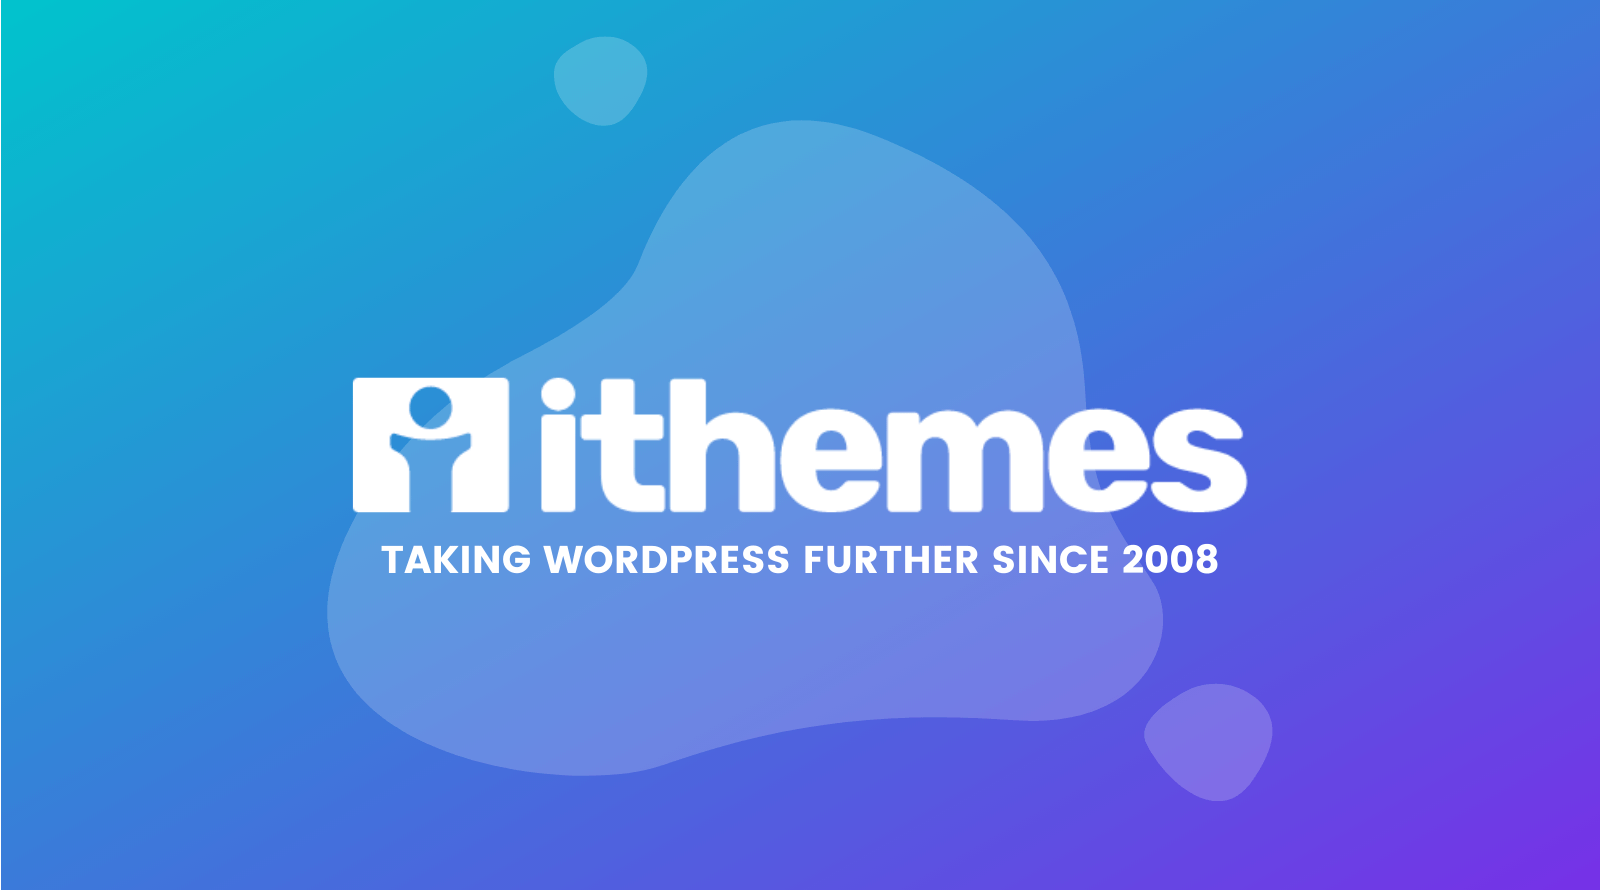 iThemes: Essential WordPress Tools & Training Since 2008